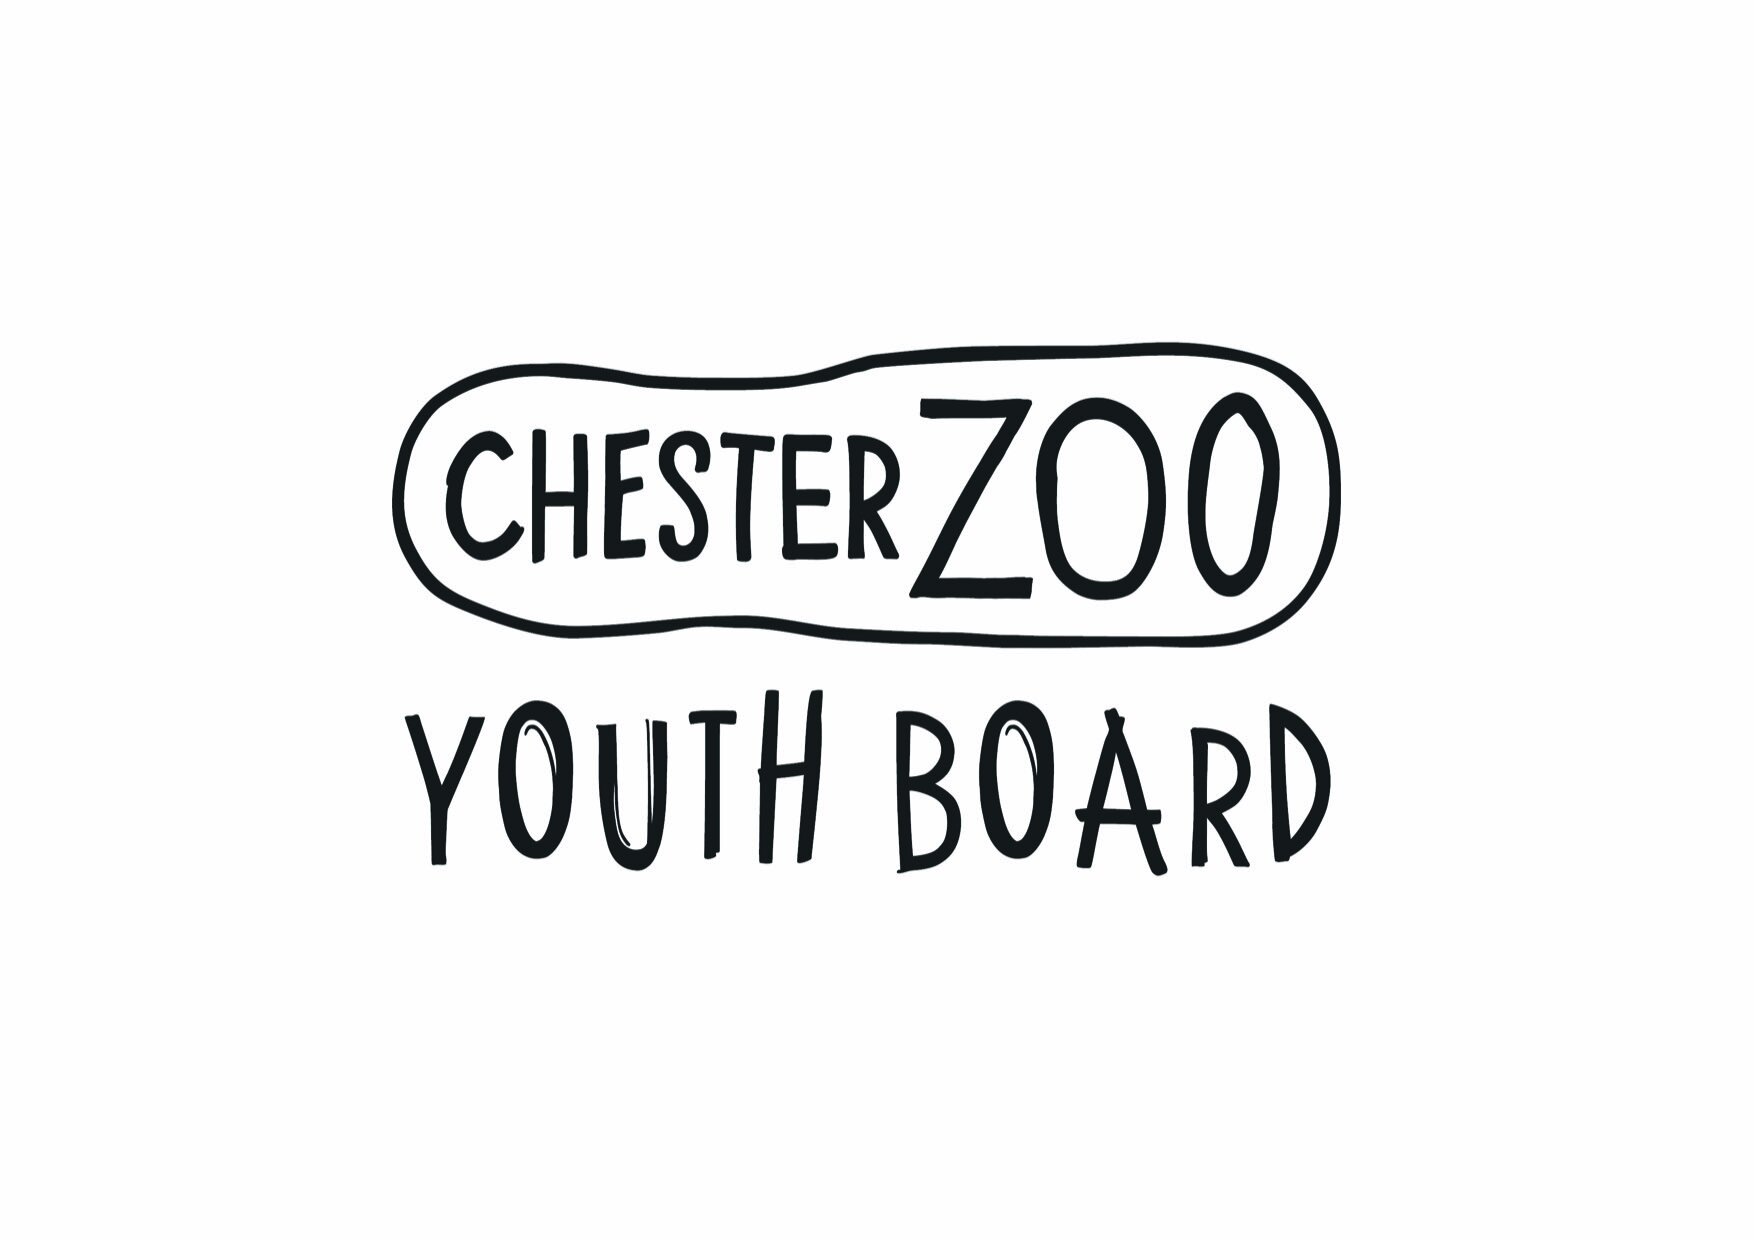 Chester Zoo youth board-01-black-01.jpg